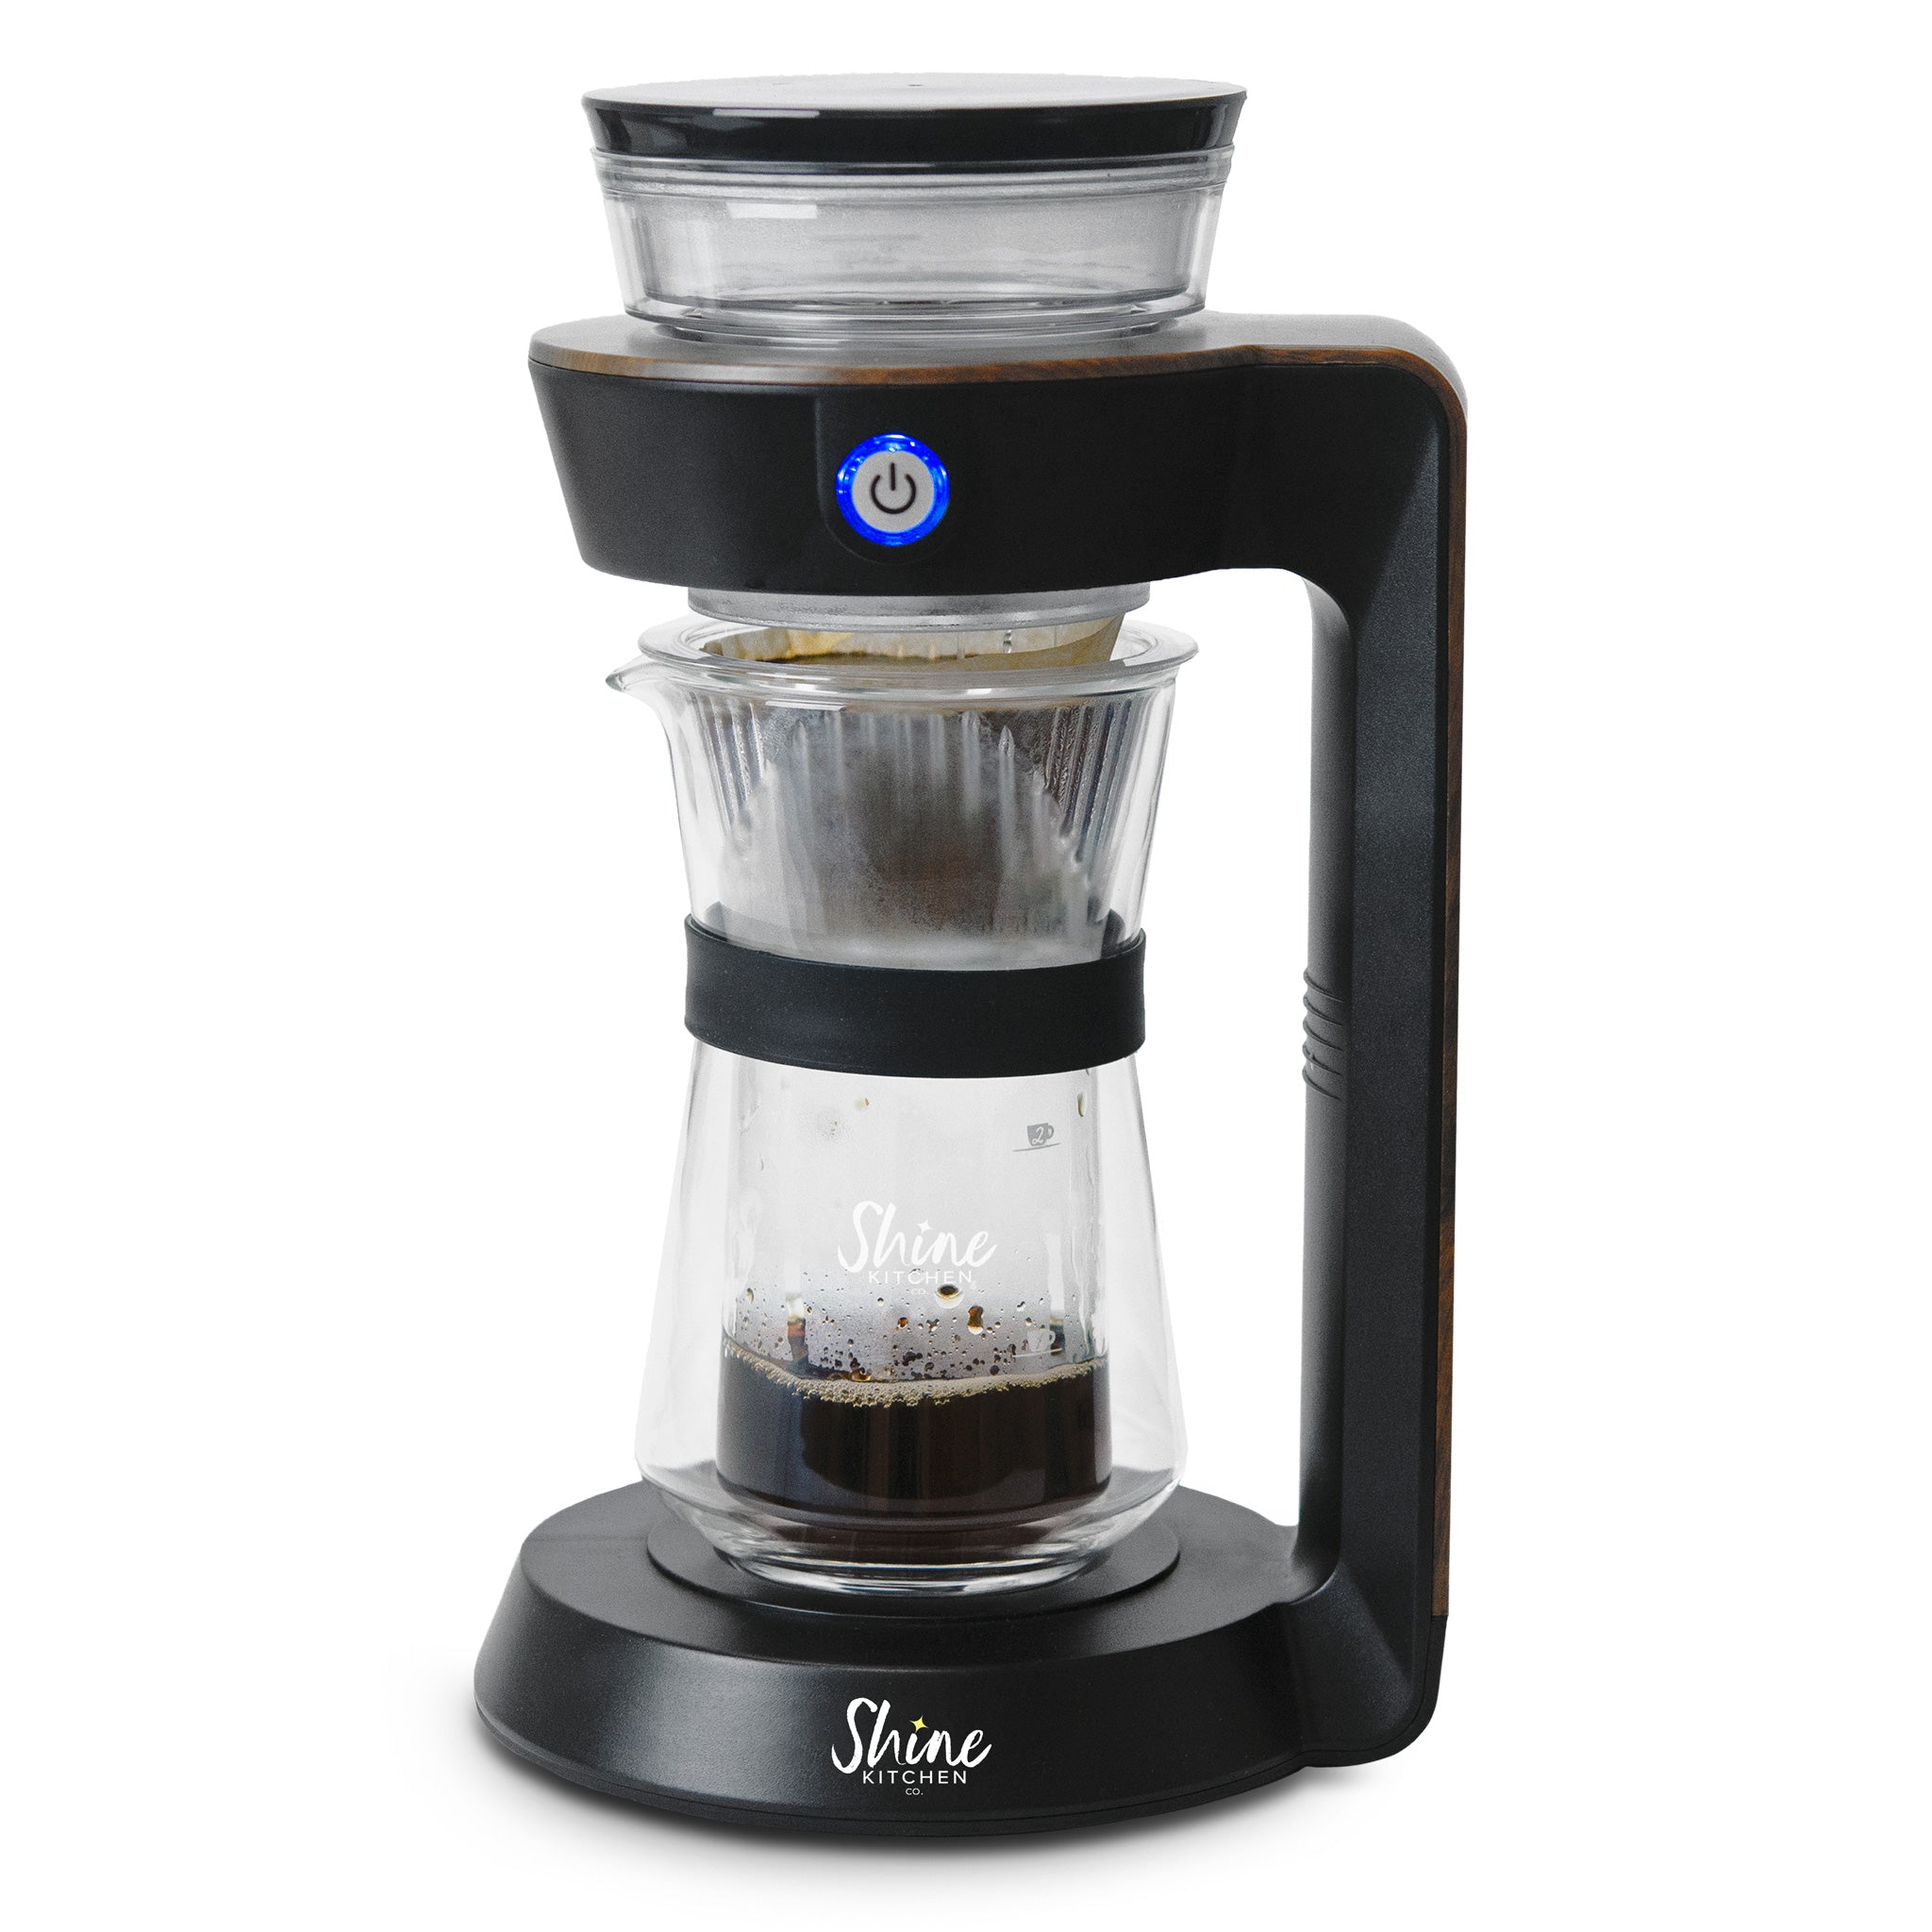 Shine Kitchen Co. Autopour Automatic Pour Over Coffee Machine Tribest